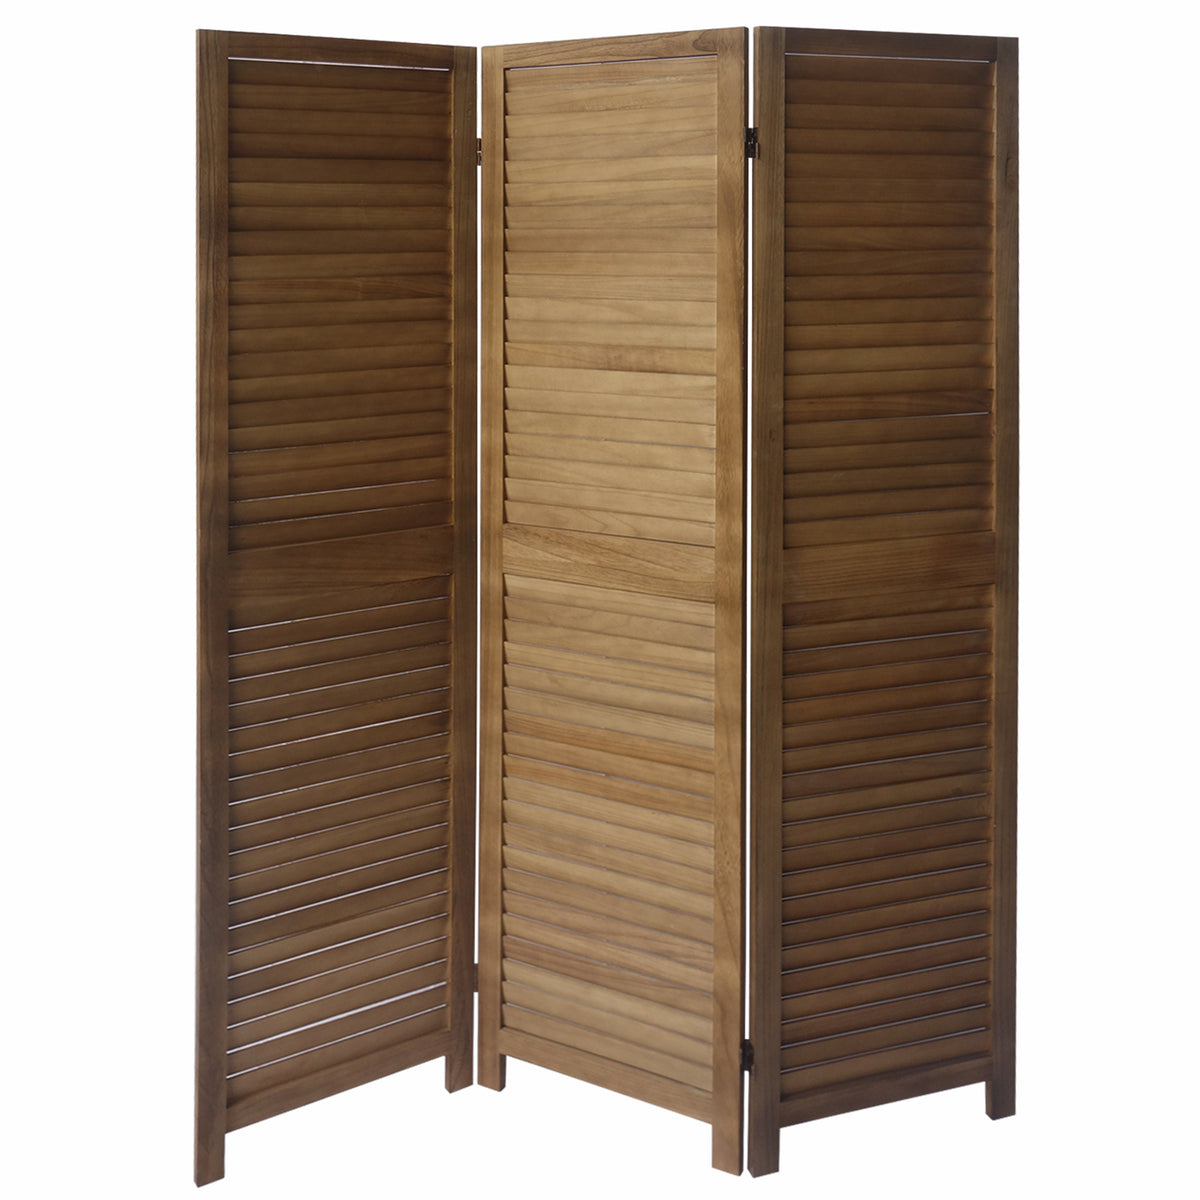 Paulownia Wood Panel Divider Screen, Shutter Design, 3 Panels - Natural Oak Brown